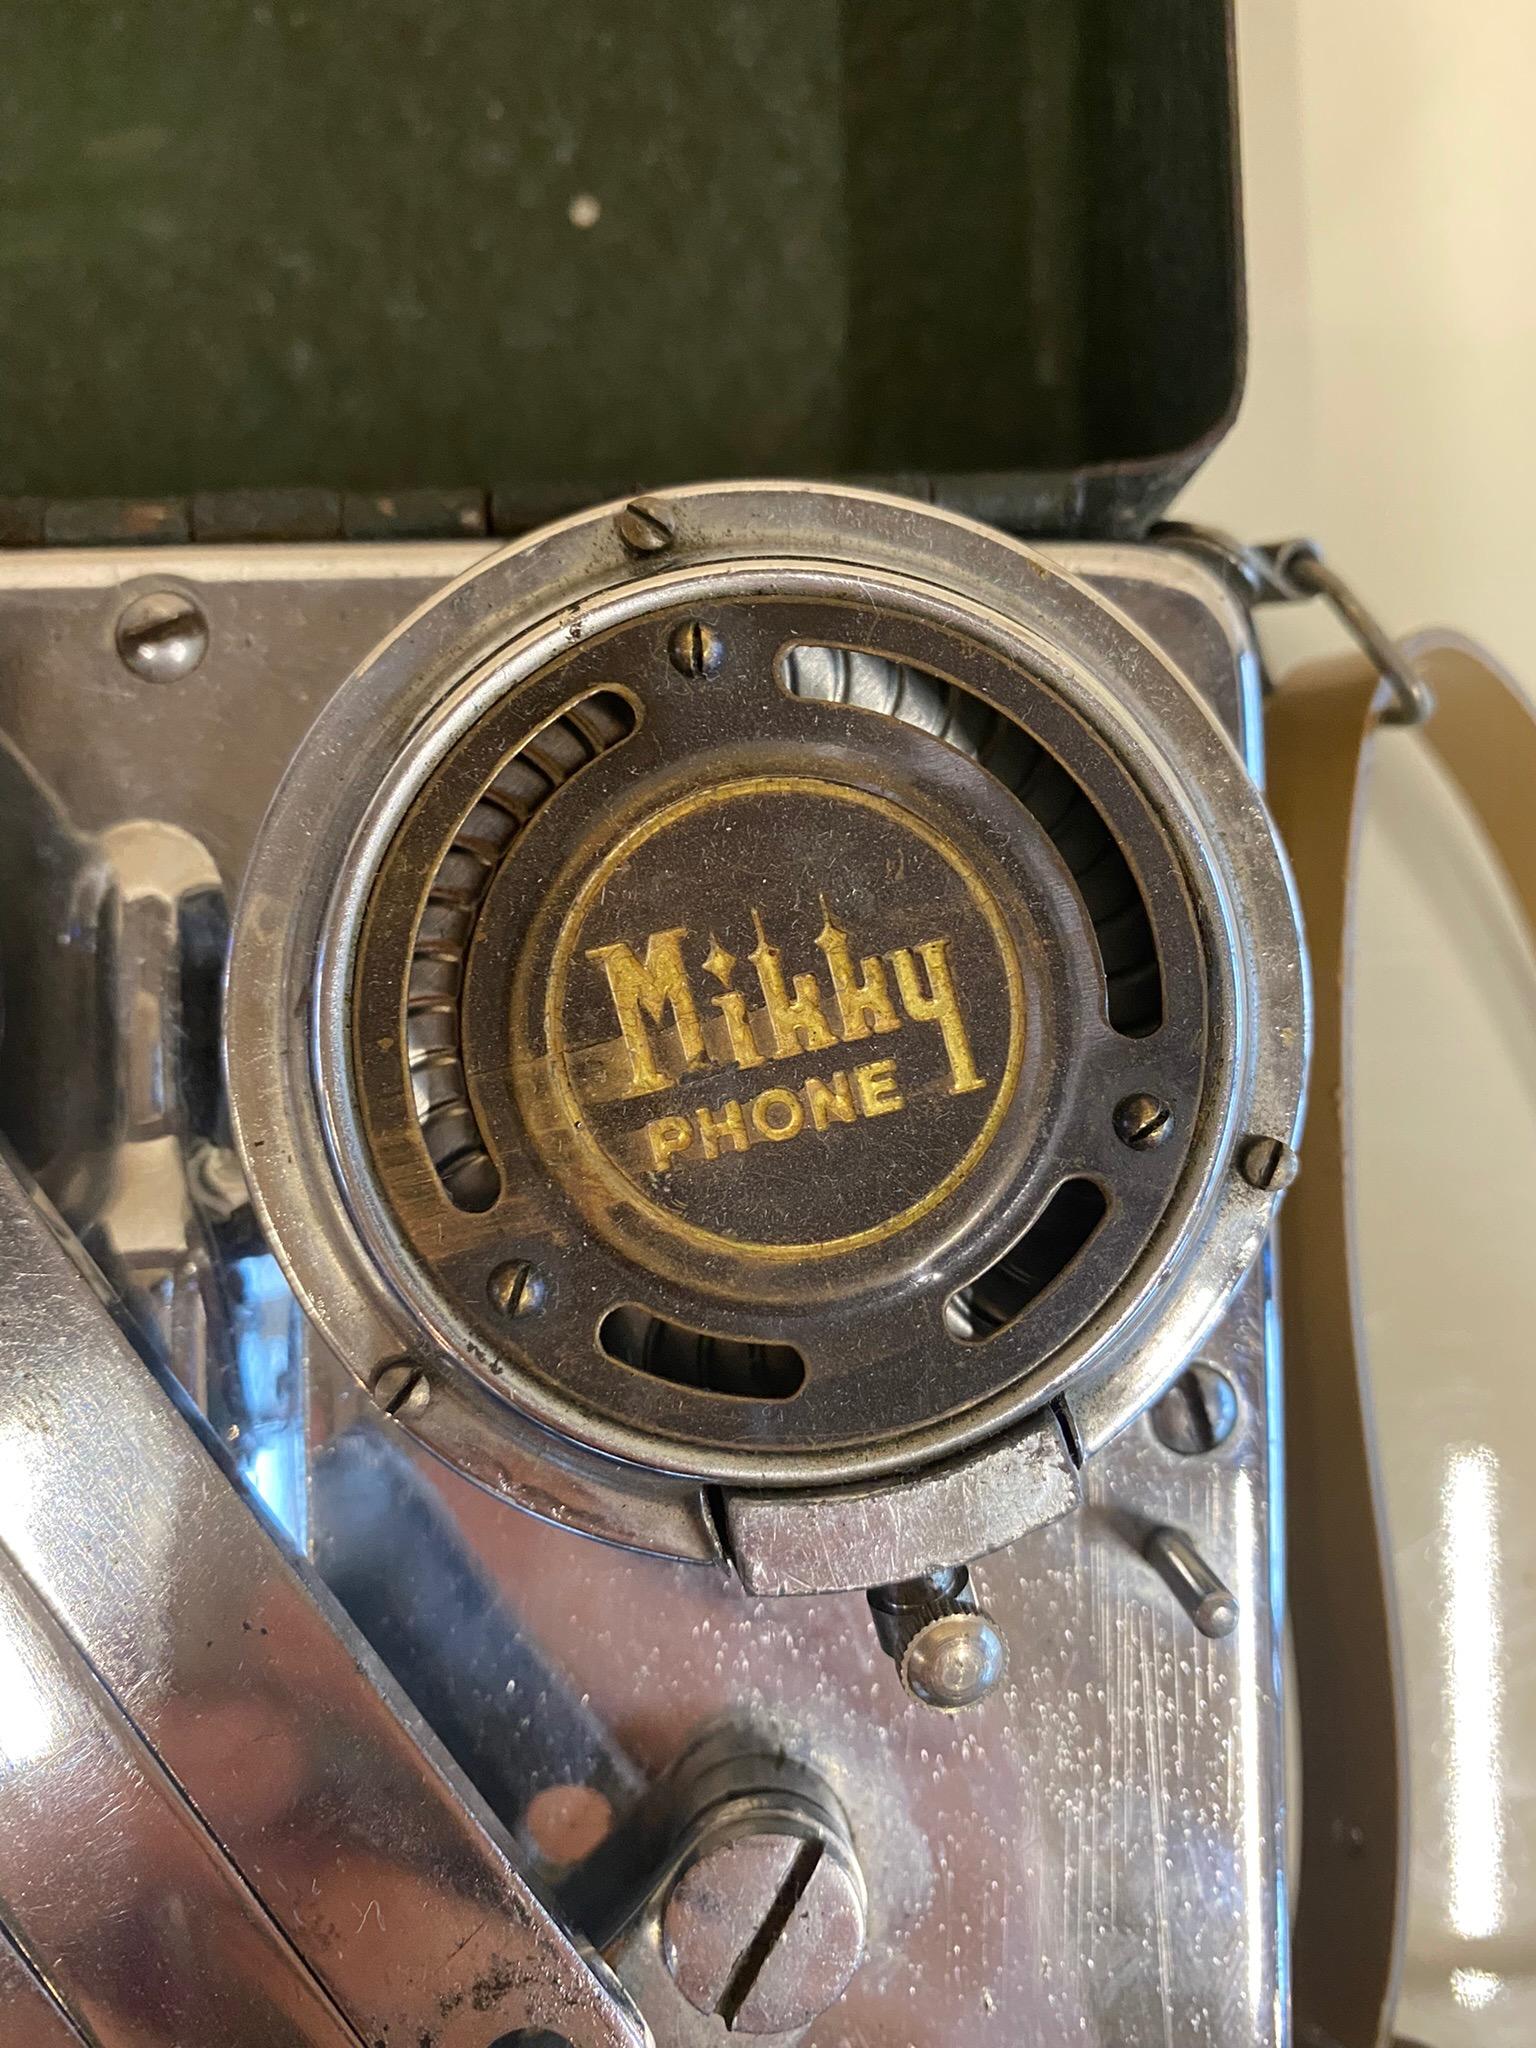 mikky phone portable gramophone